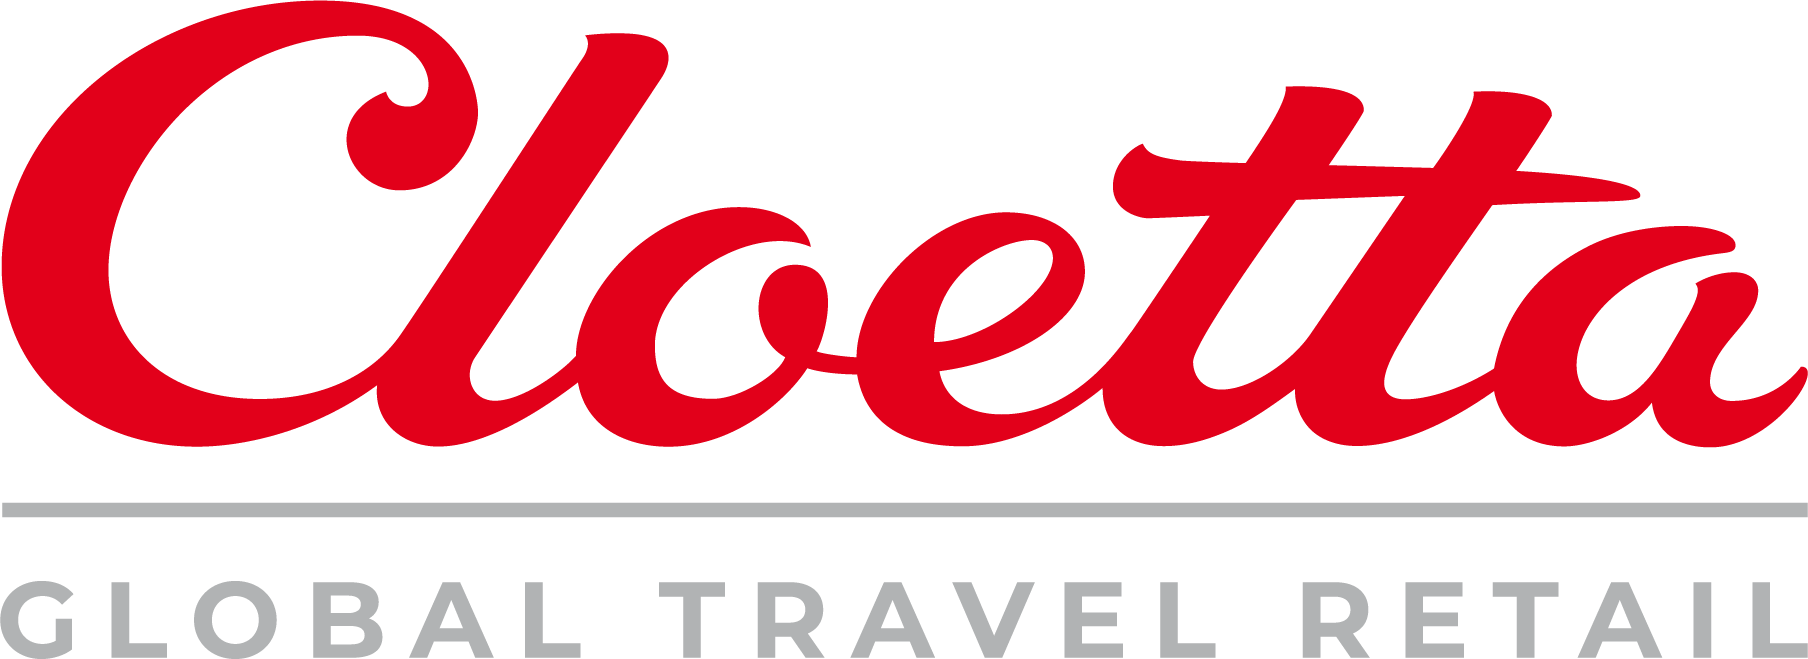 Cloetta GTR - Cloetta Global Travel Retail